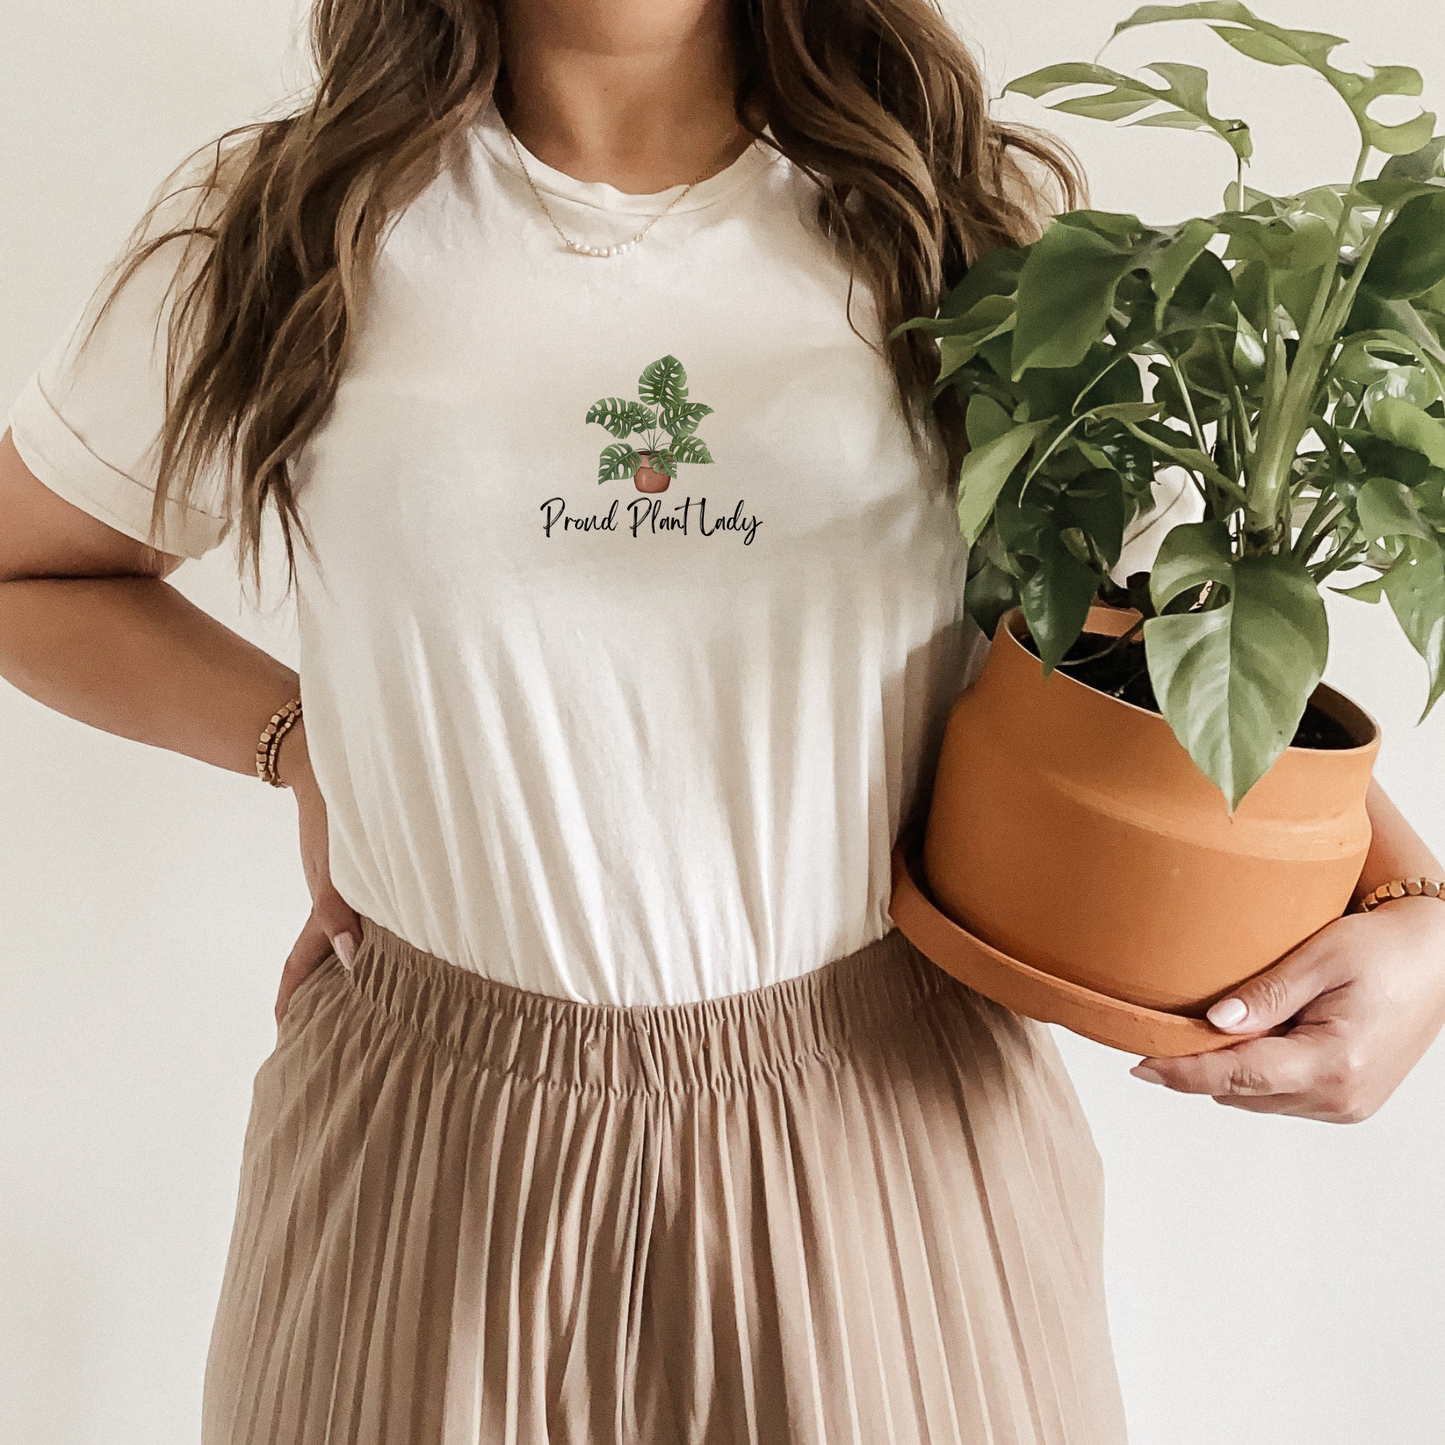 Proud Plant Lady Graphic Tee, Unisex Bella+Canvas